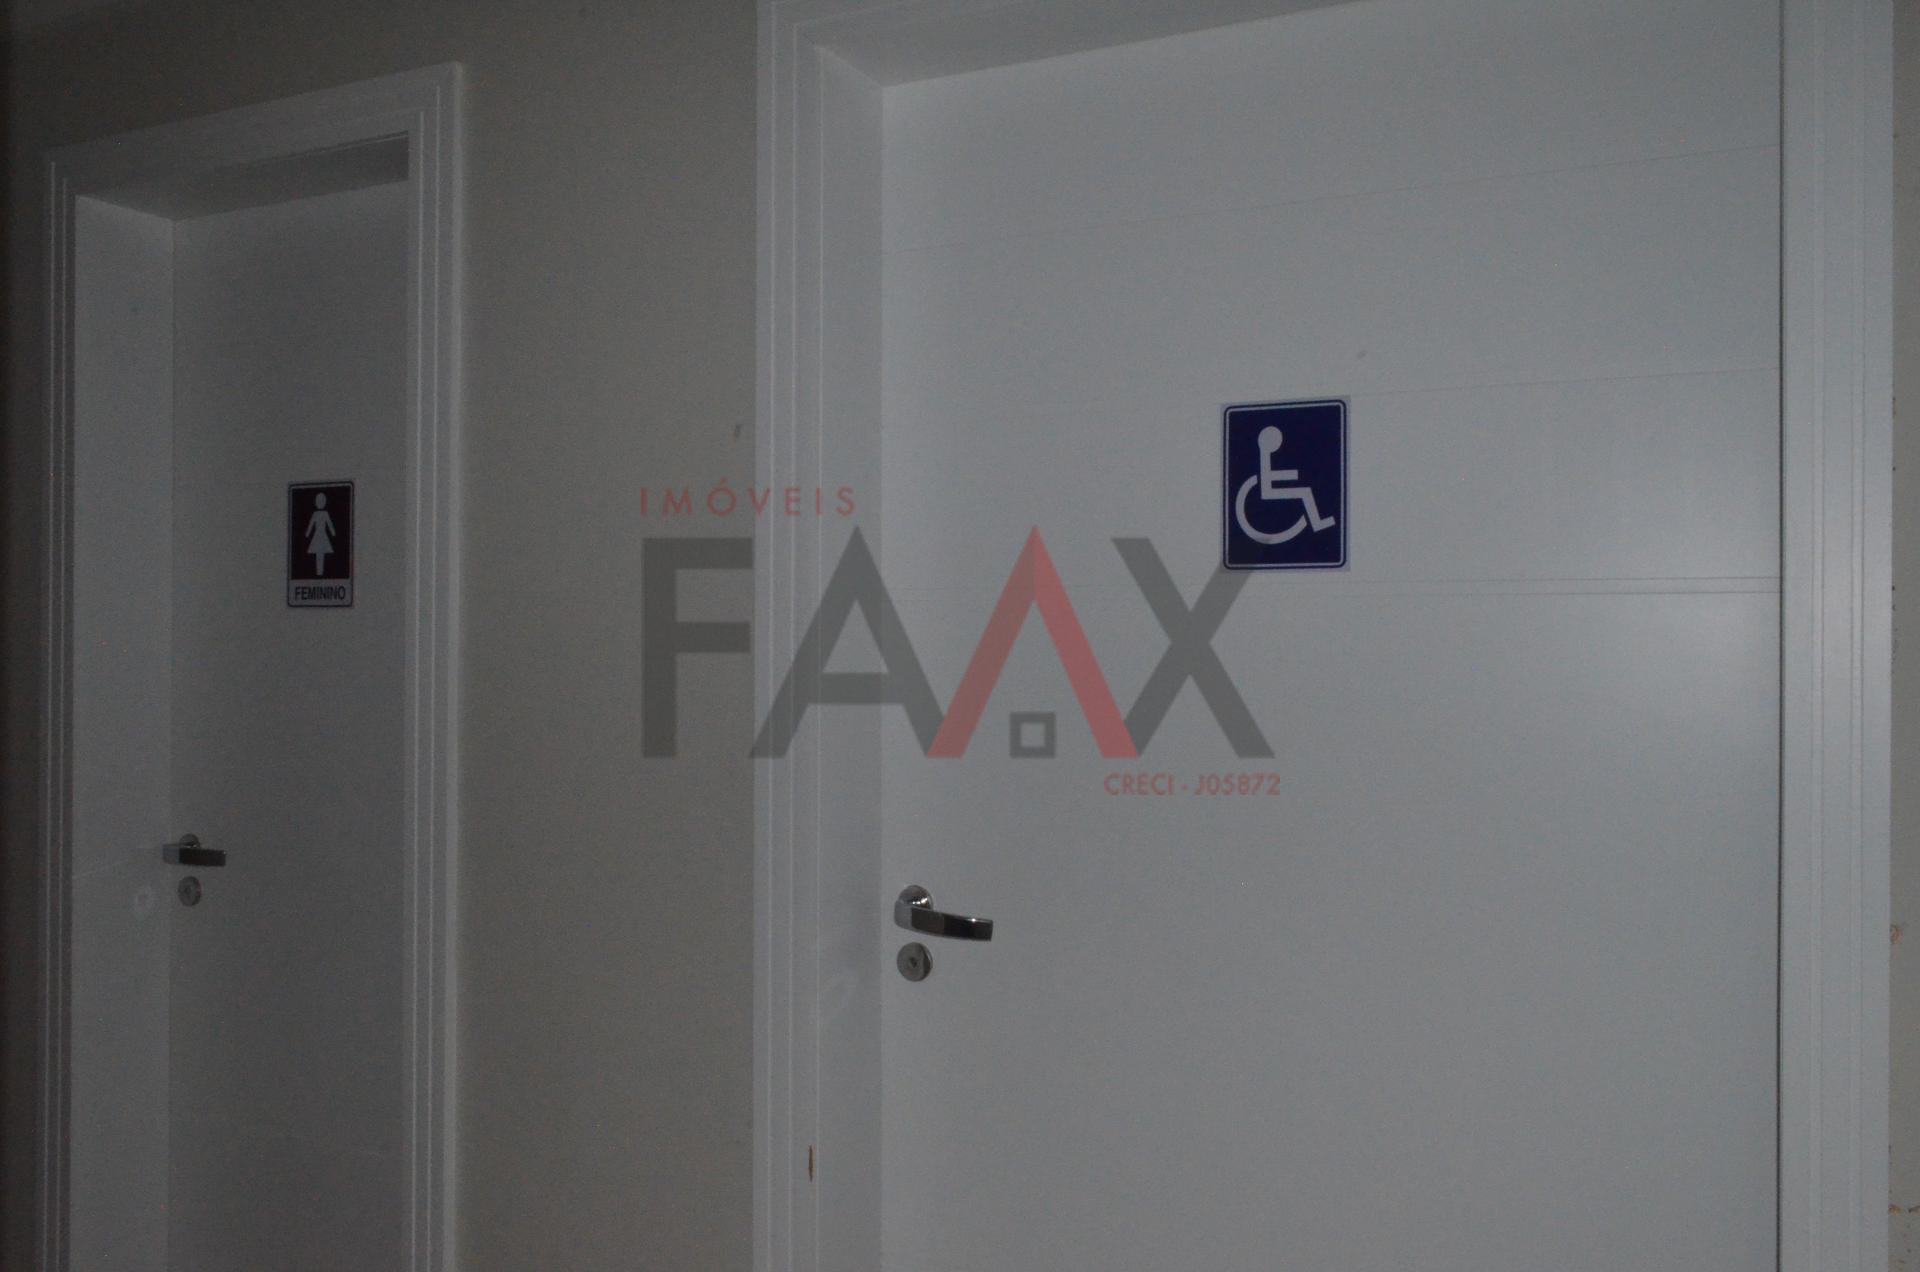 Entrada dos WC Masculino, feminino e acessibiliade.